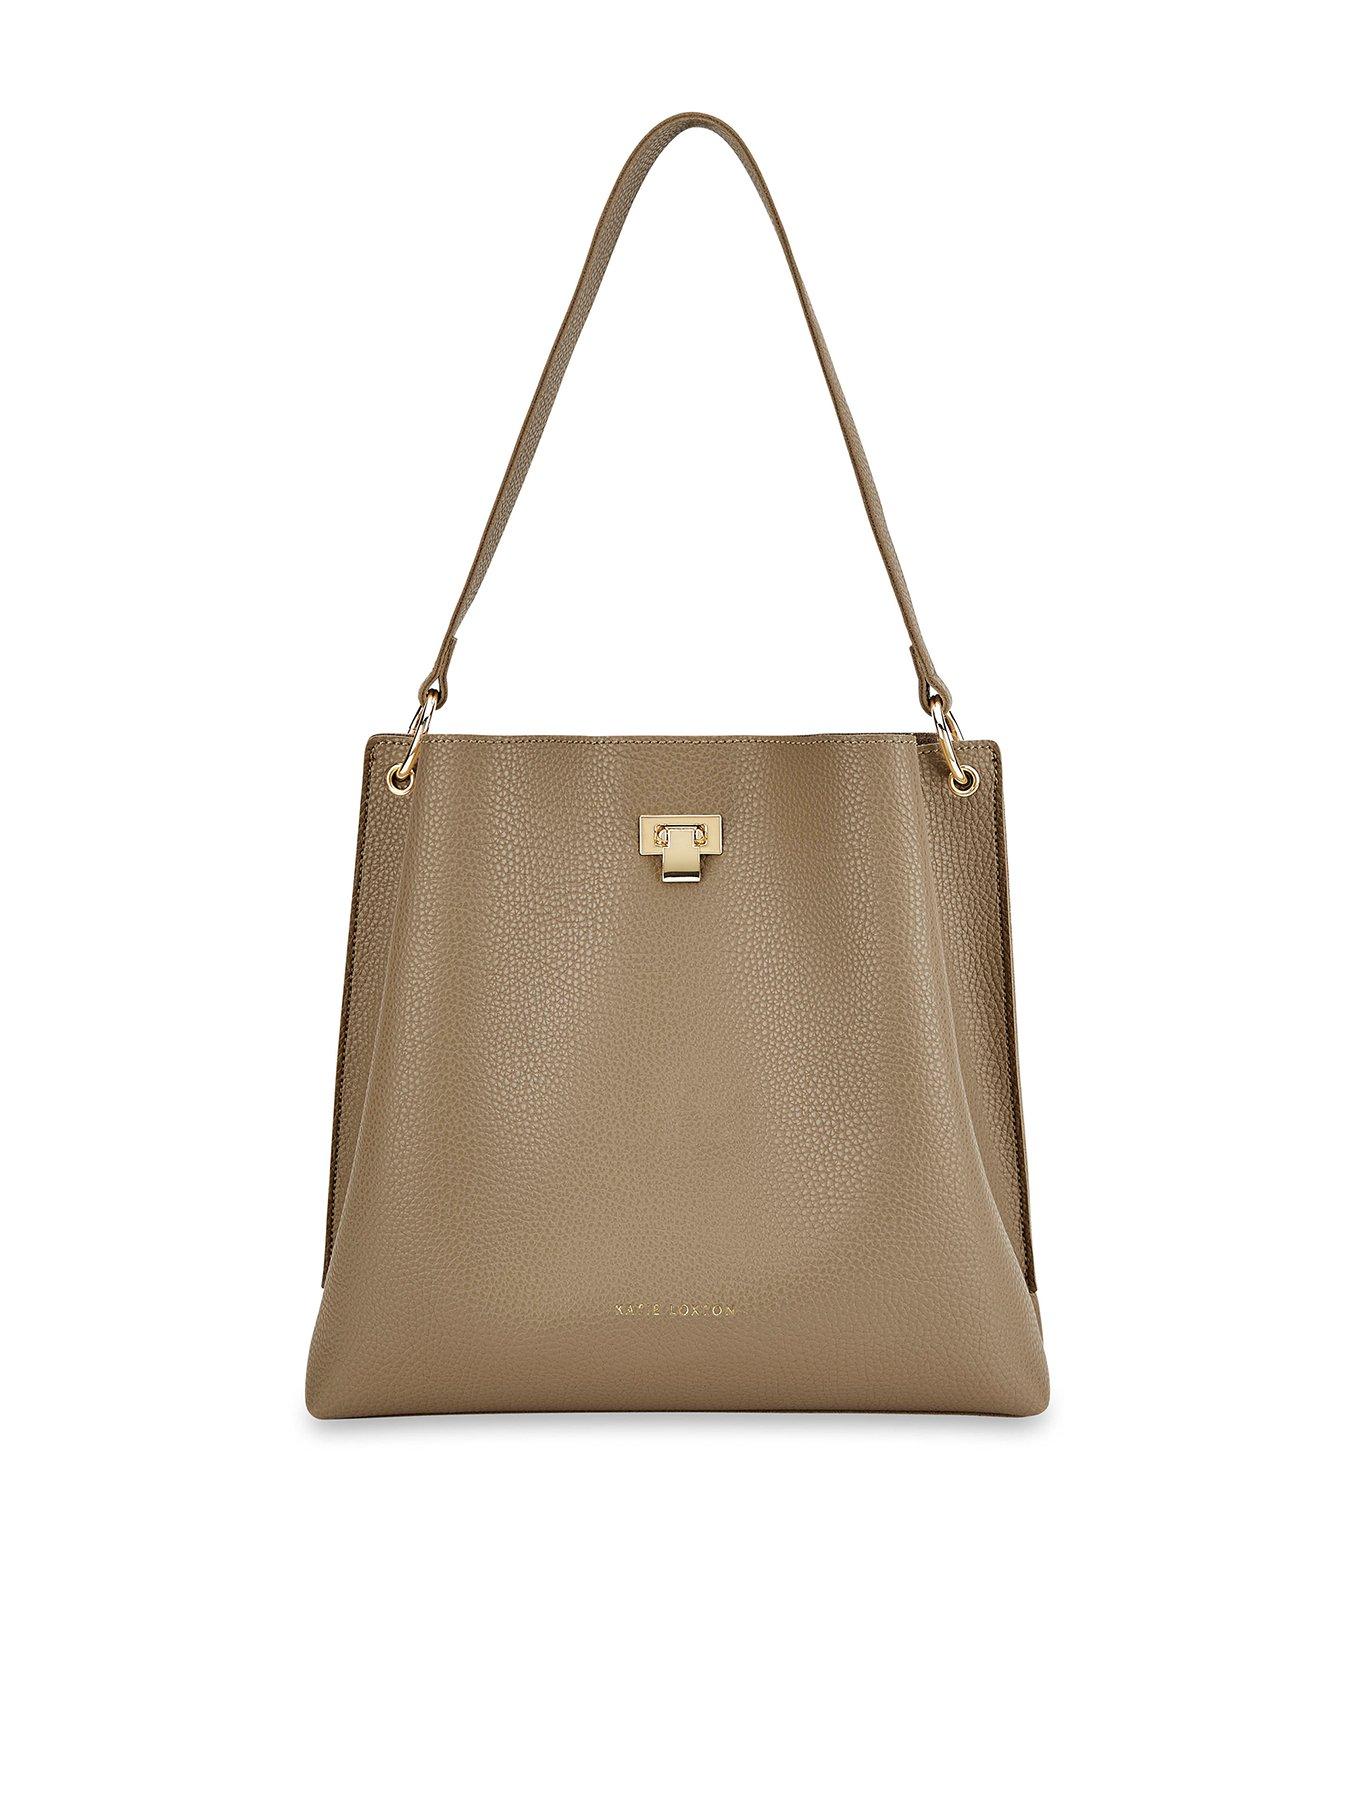 Bags & Purses Reese Shoulder Bag - Taupe